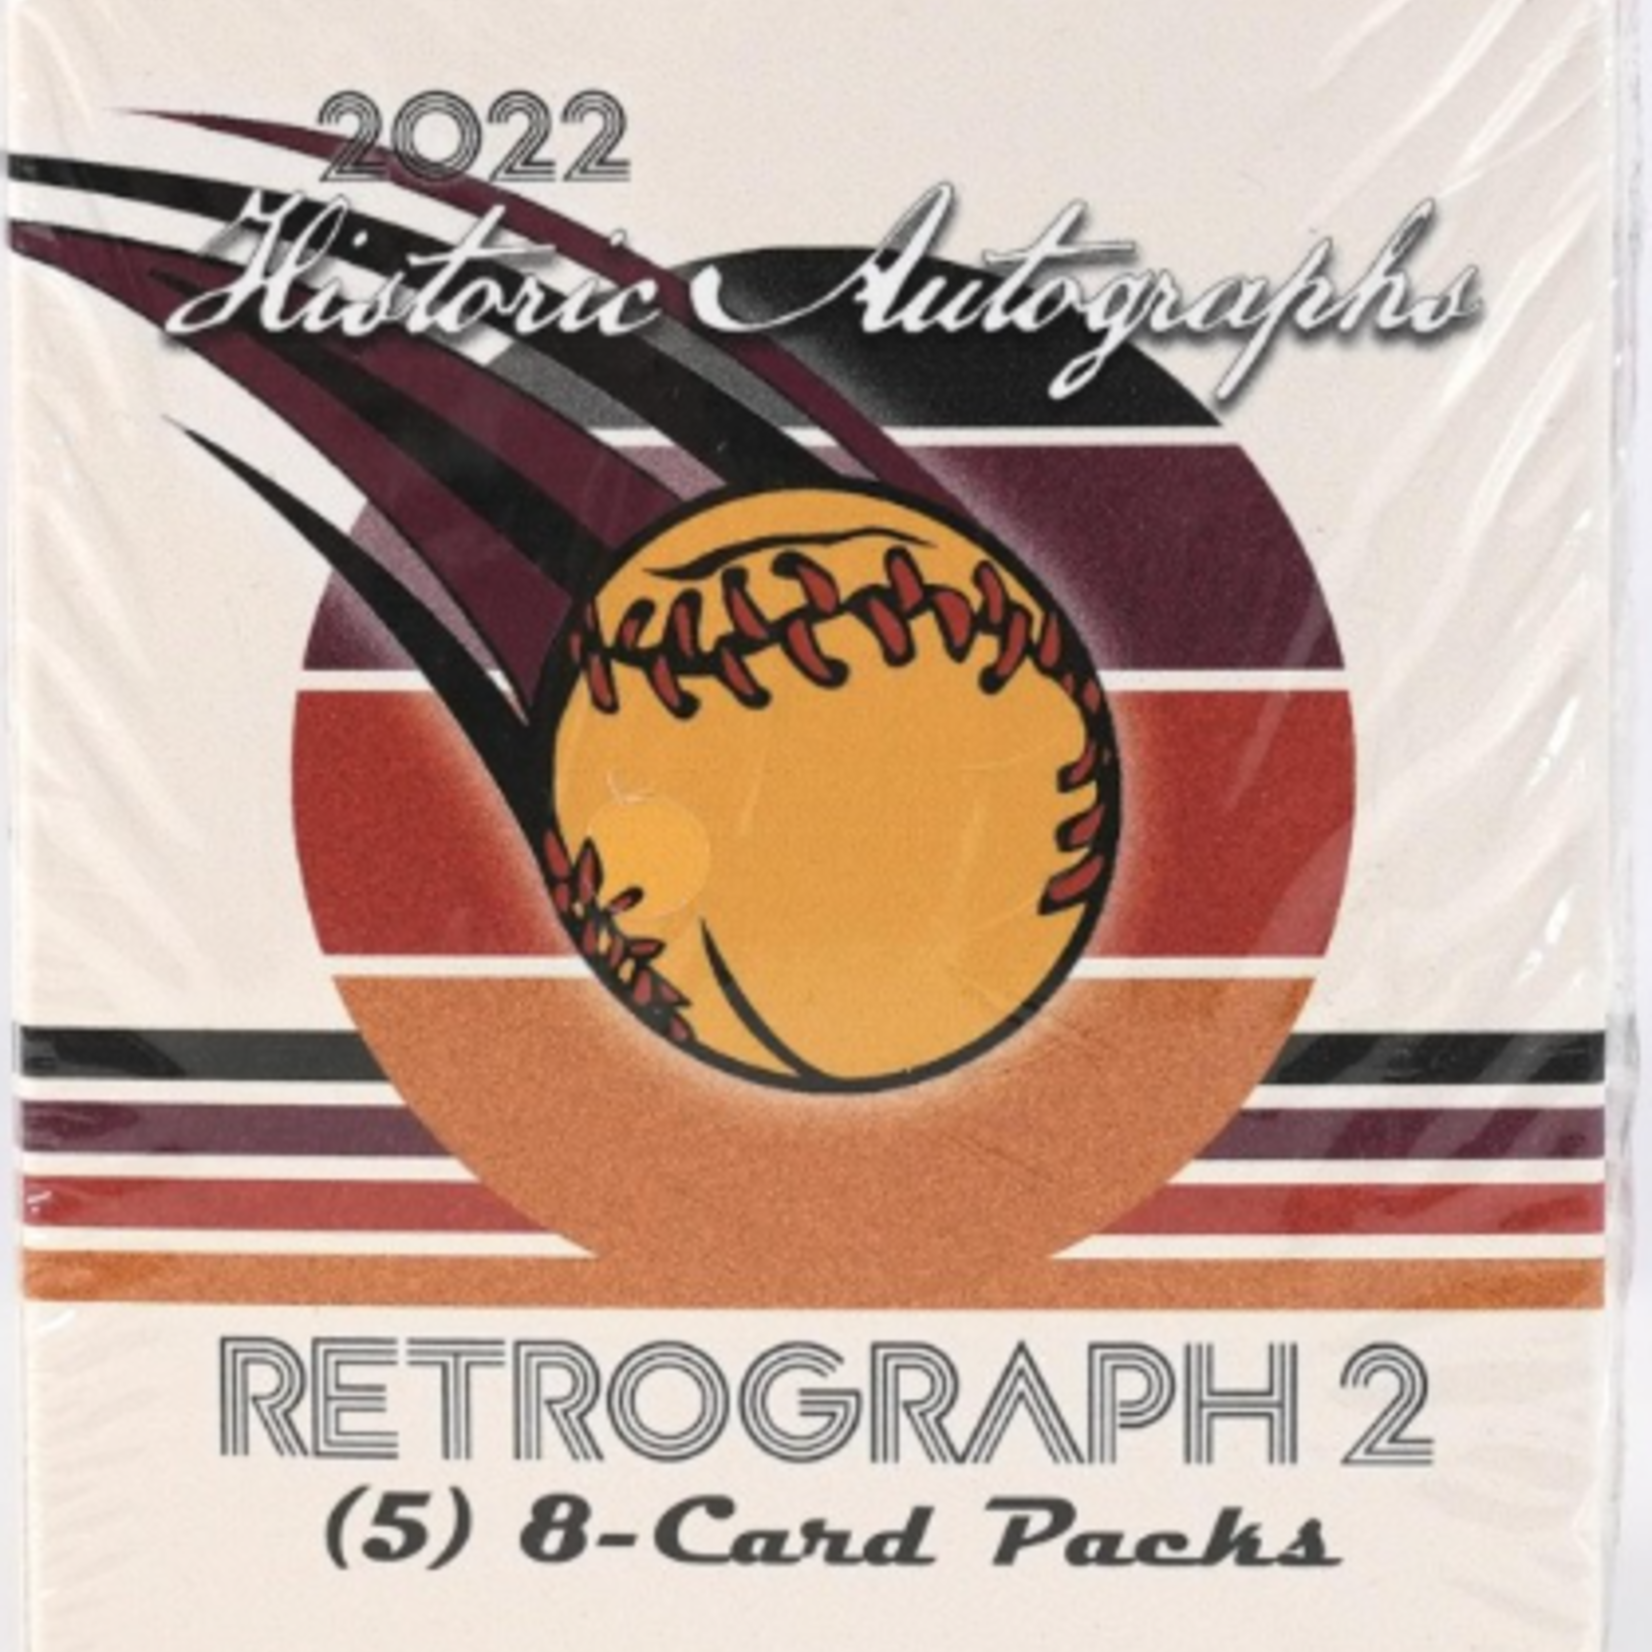 2022 Historic Autographs RetroGraph 2 Baseball